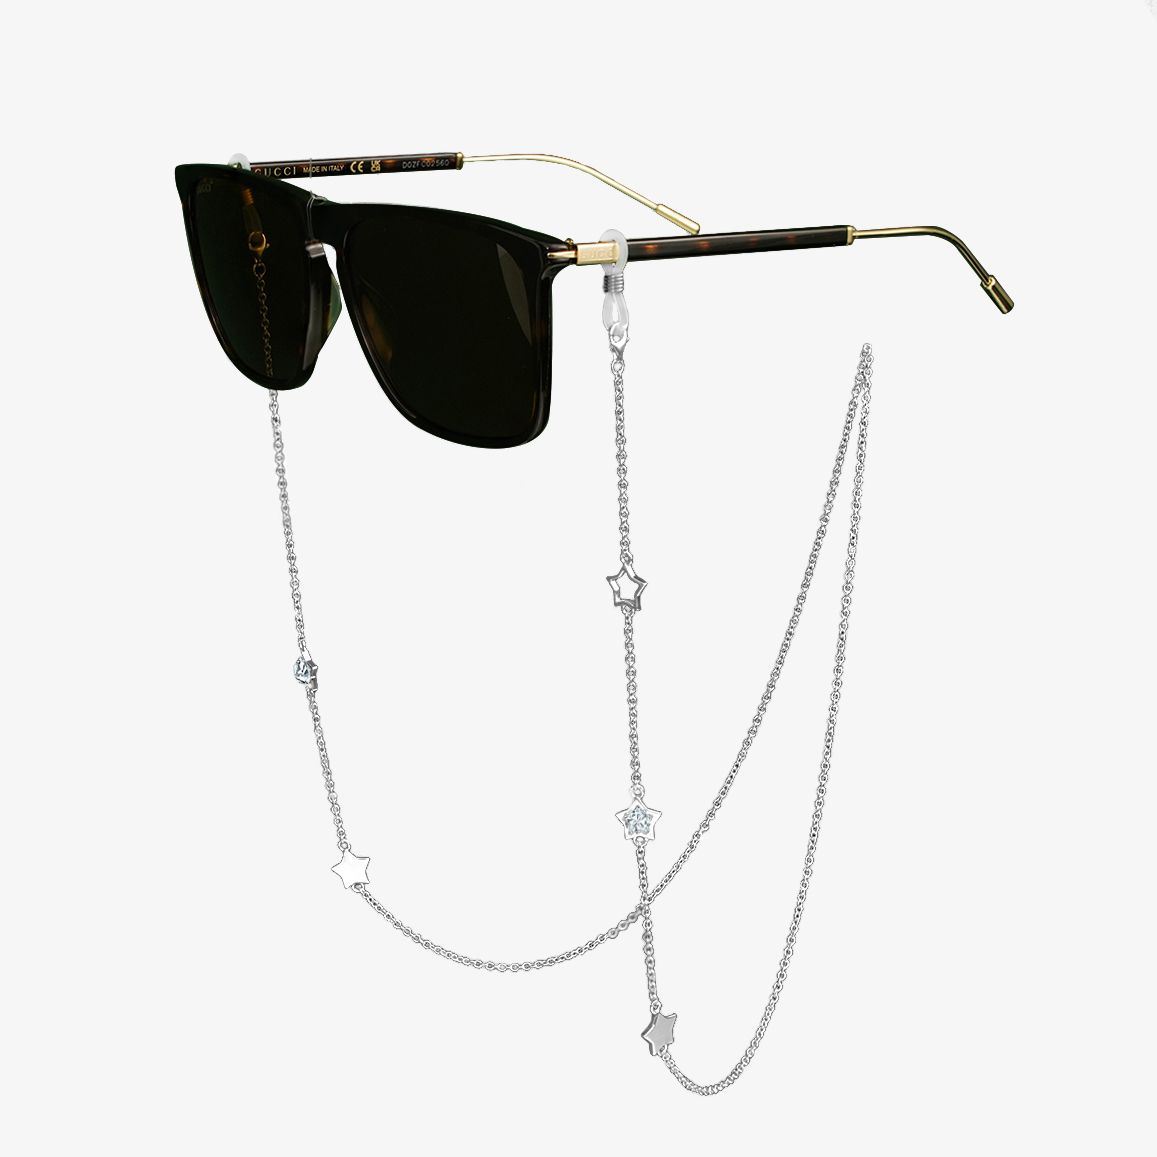 Share more than 168 sunglasses accessories super hot